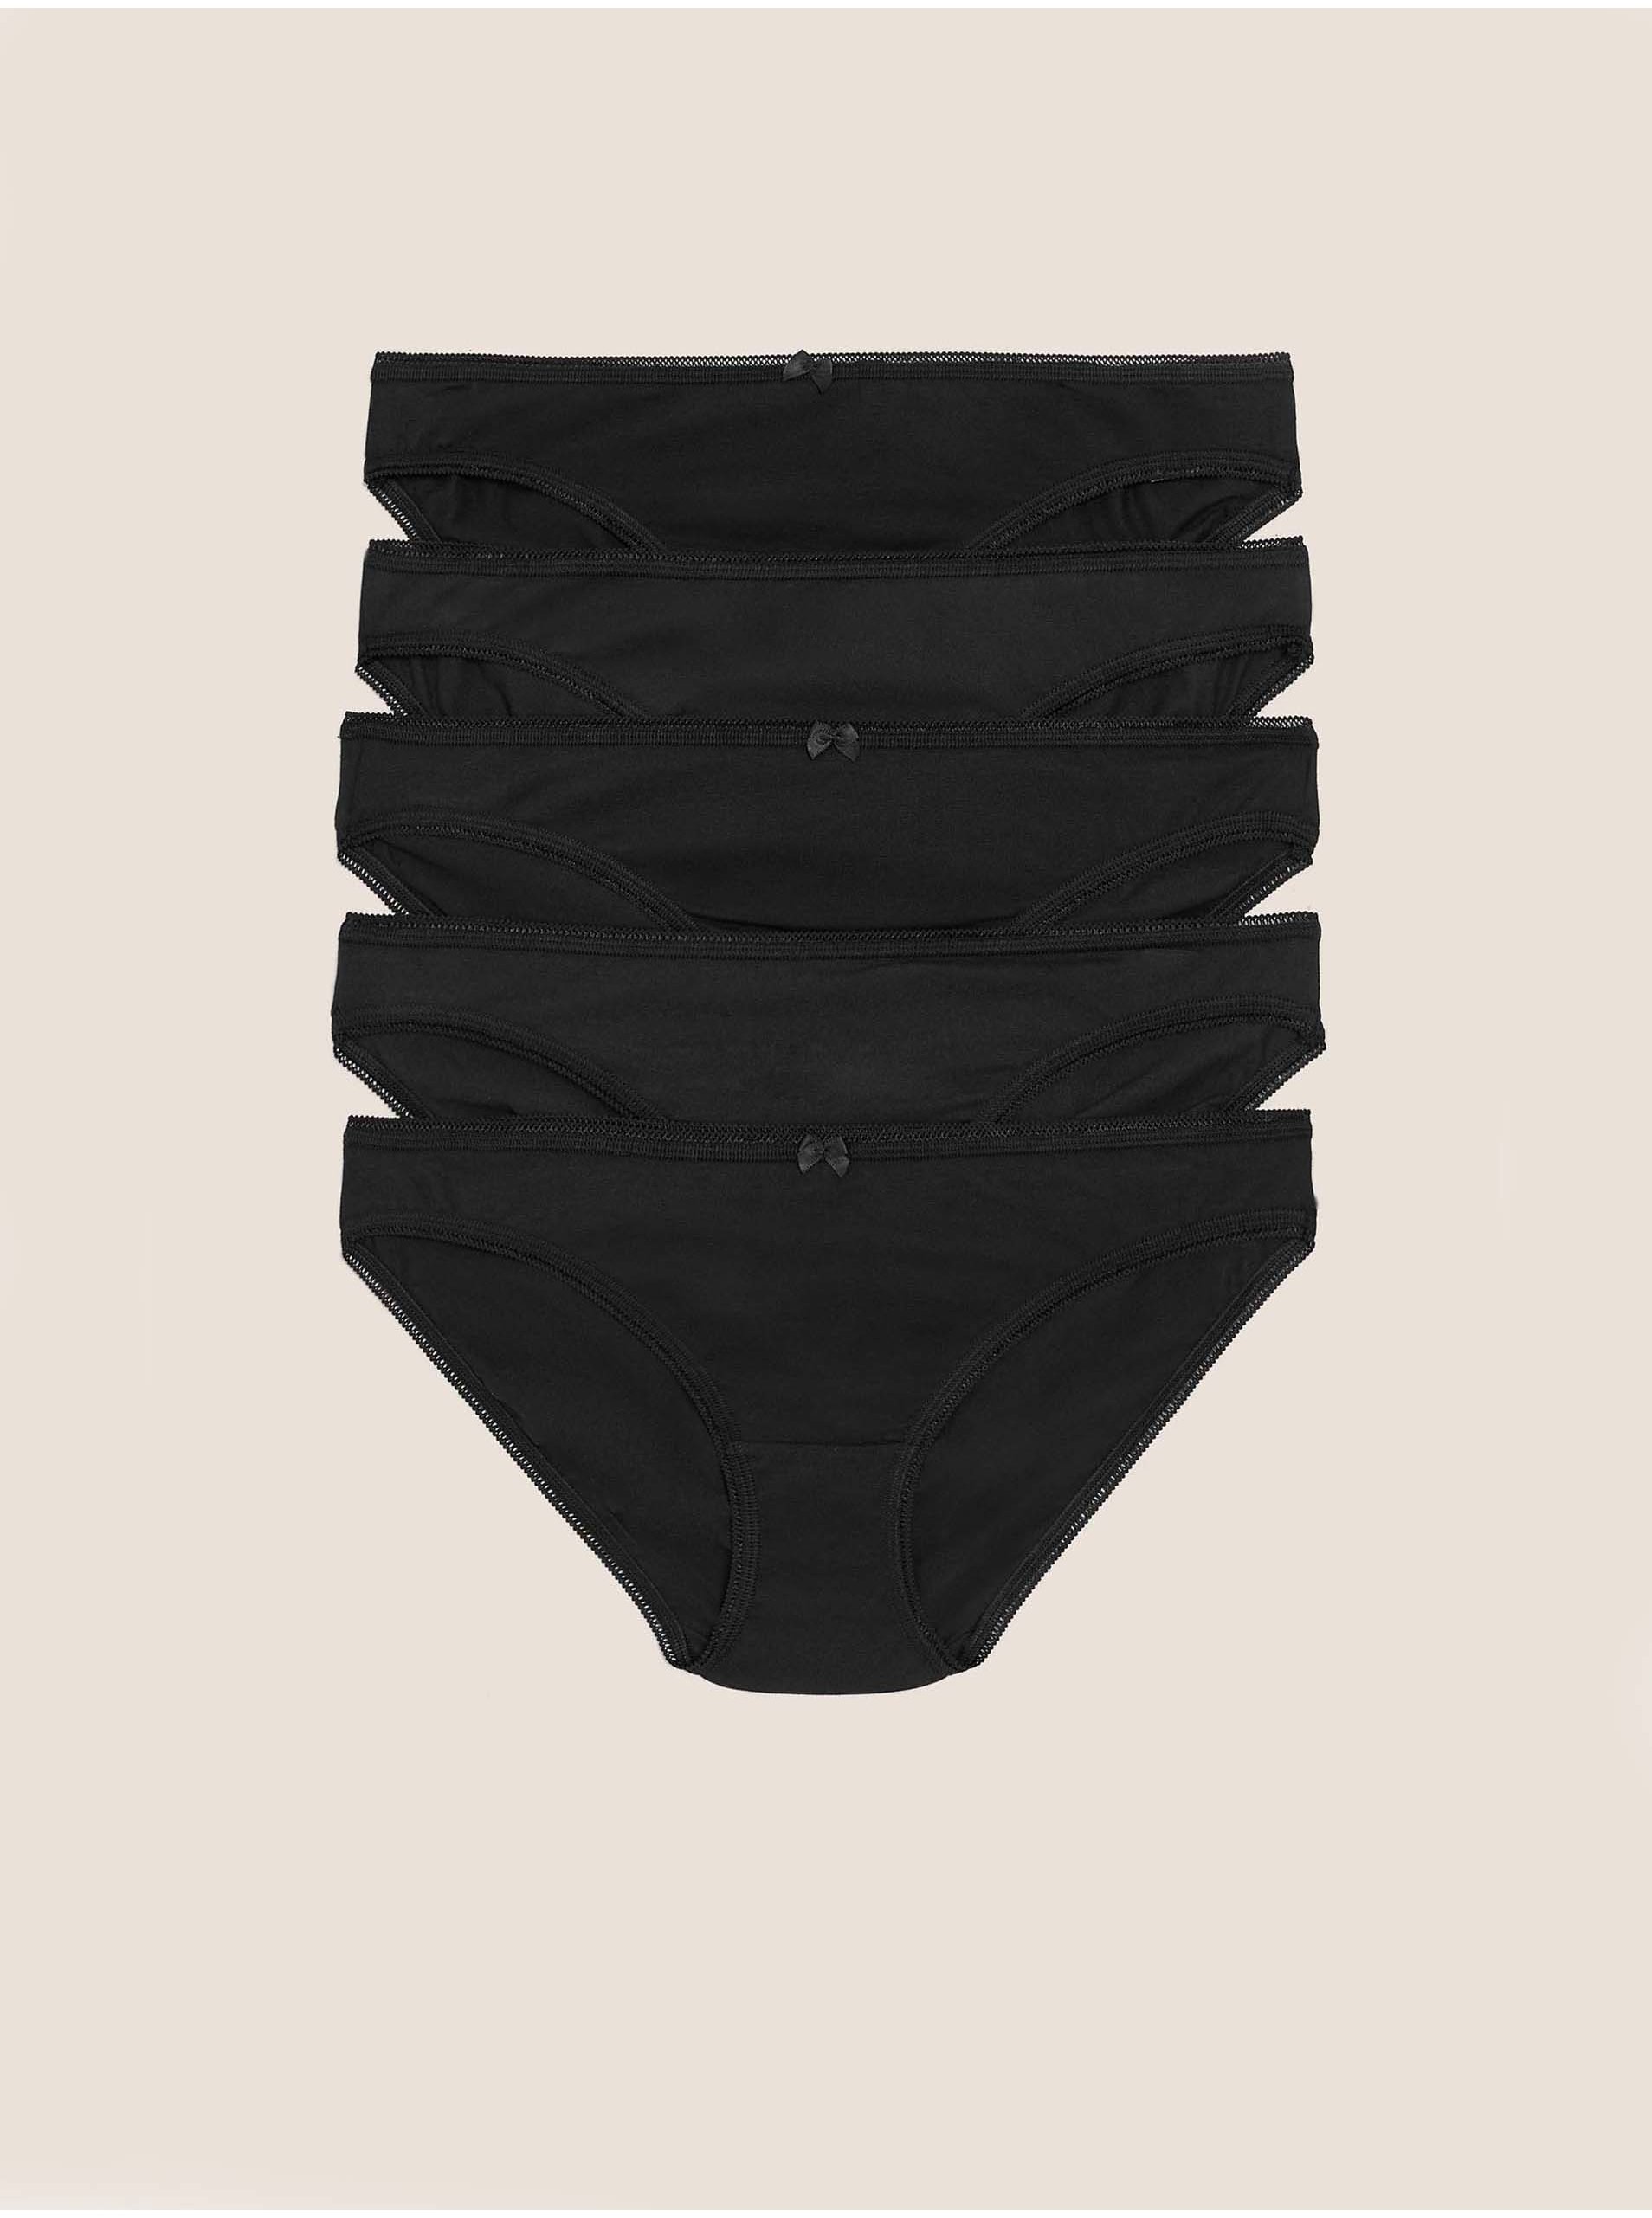 E-shop Bikini kalhotky z bavlny s lycrou®, 5 ks v balení Marks & Spencer černá